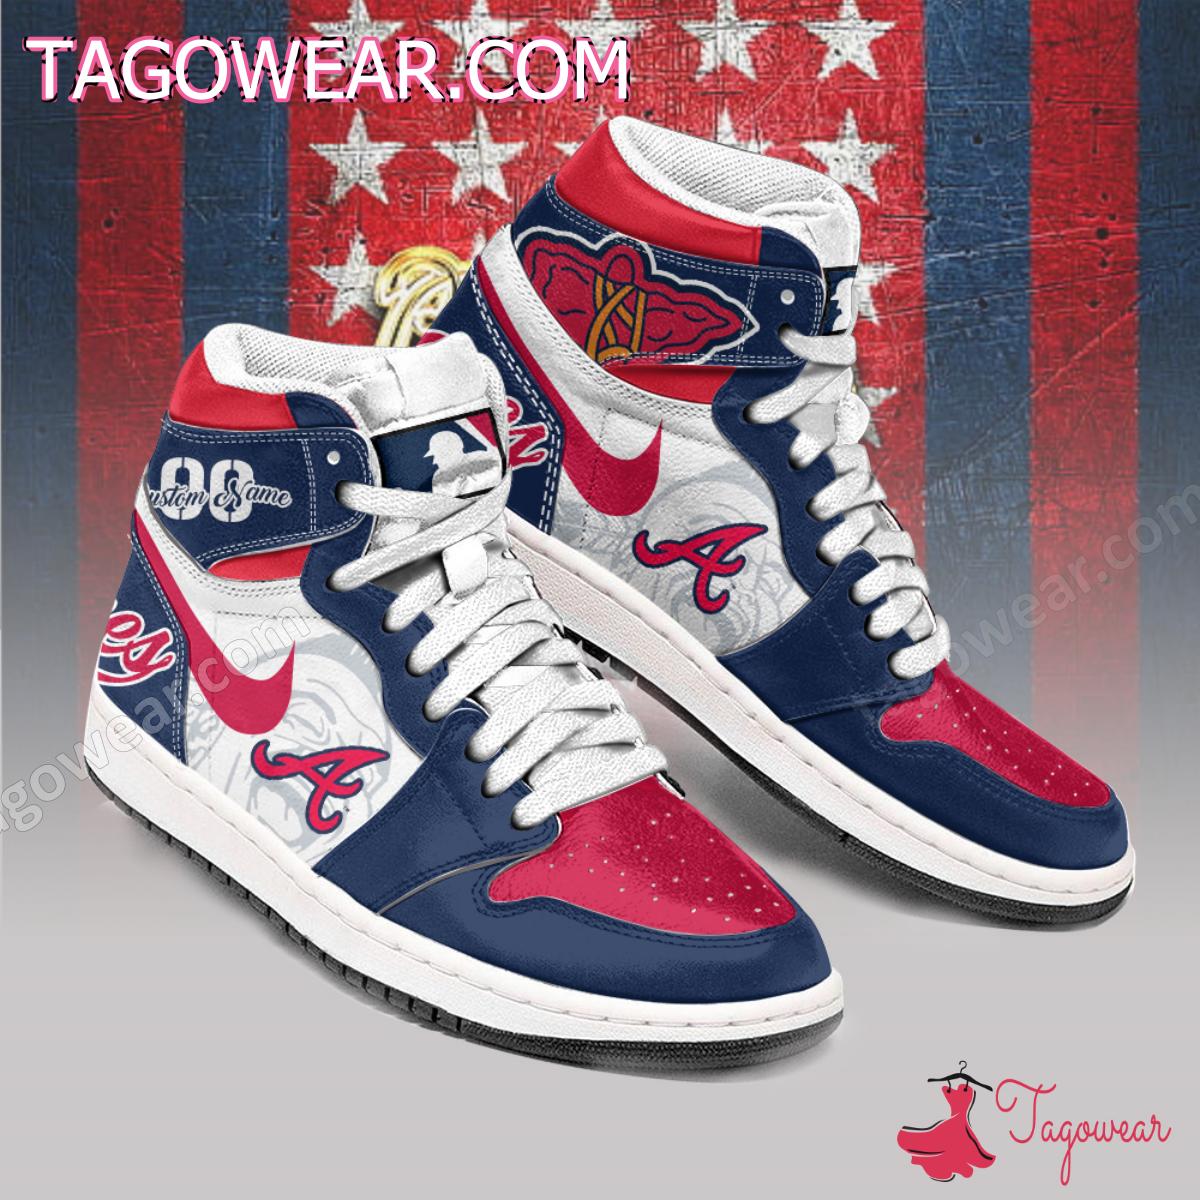 Atlanta Braves Mascot Personalized Air Jordan High Top Shoes a